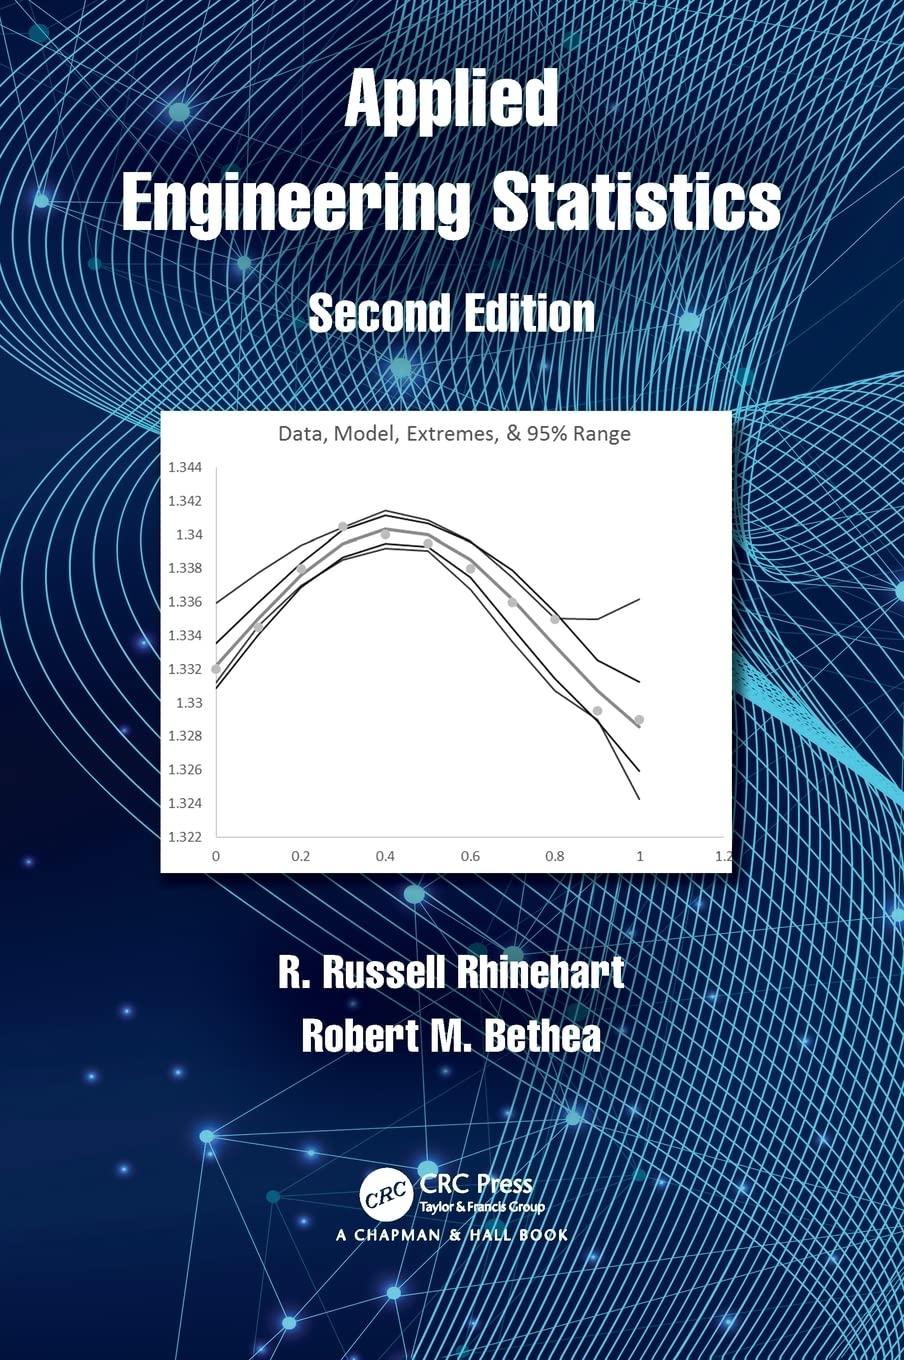 applied engineering statistics 2nd edition r. russell rhinehart, robert m. bethea 1032119489, 9781032119489